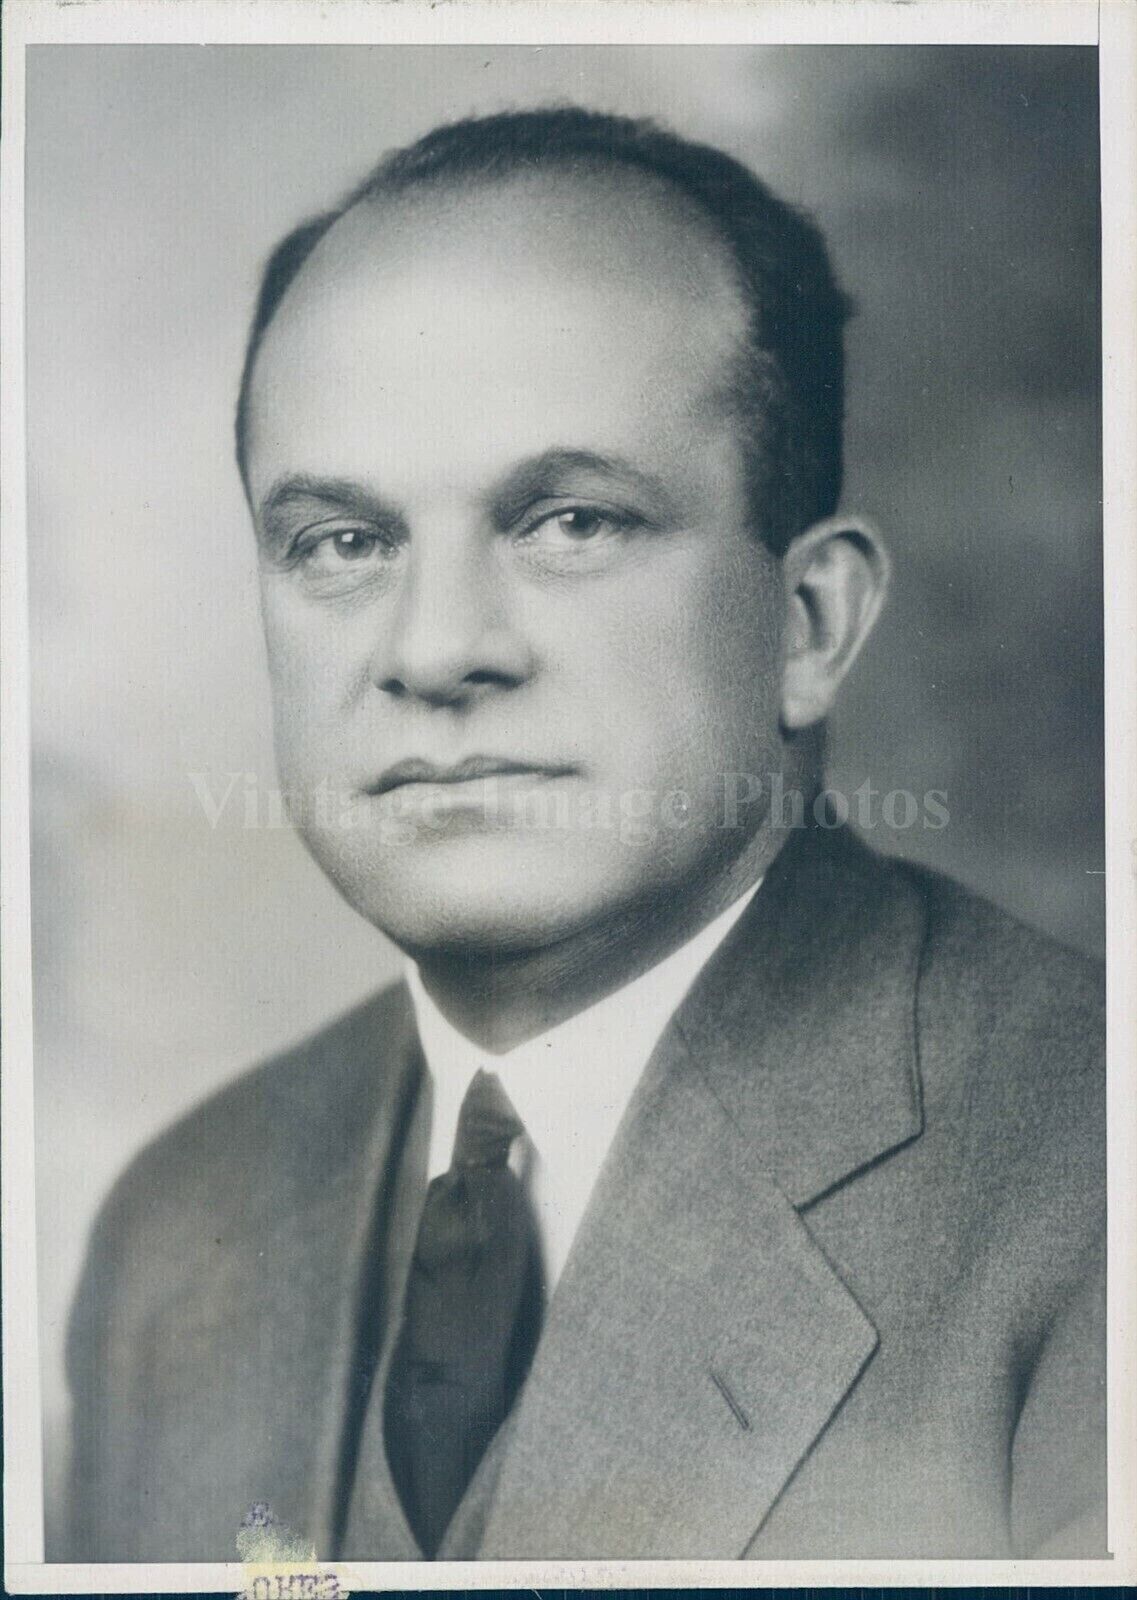 1934 Judge EP Carville District Judge Elko NE Attorney Nominee Politics US Photo